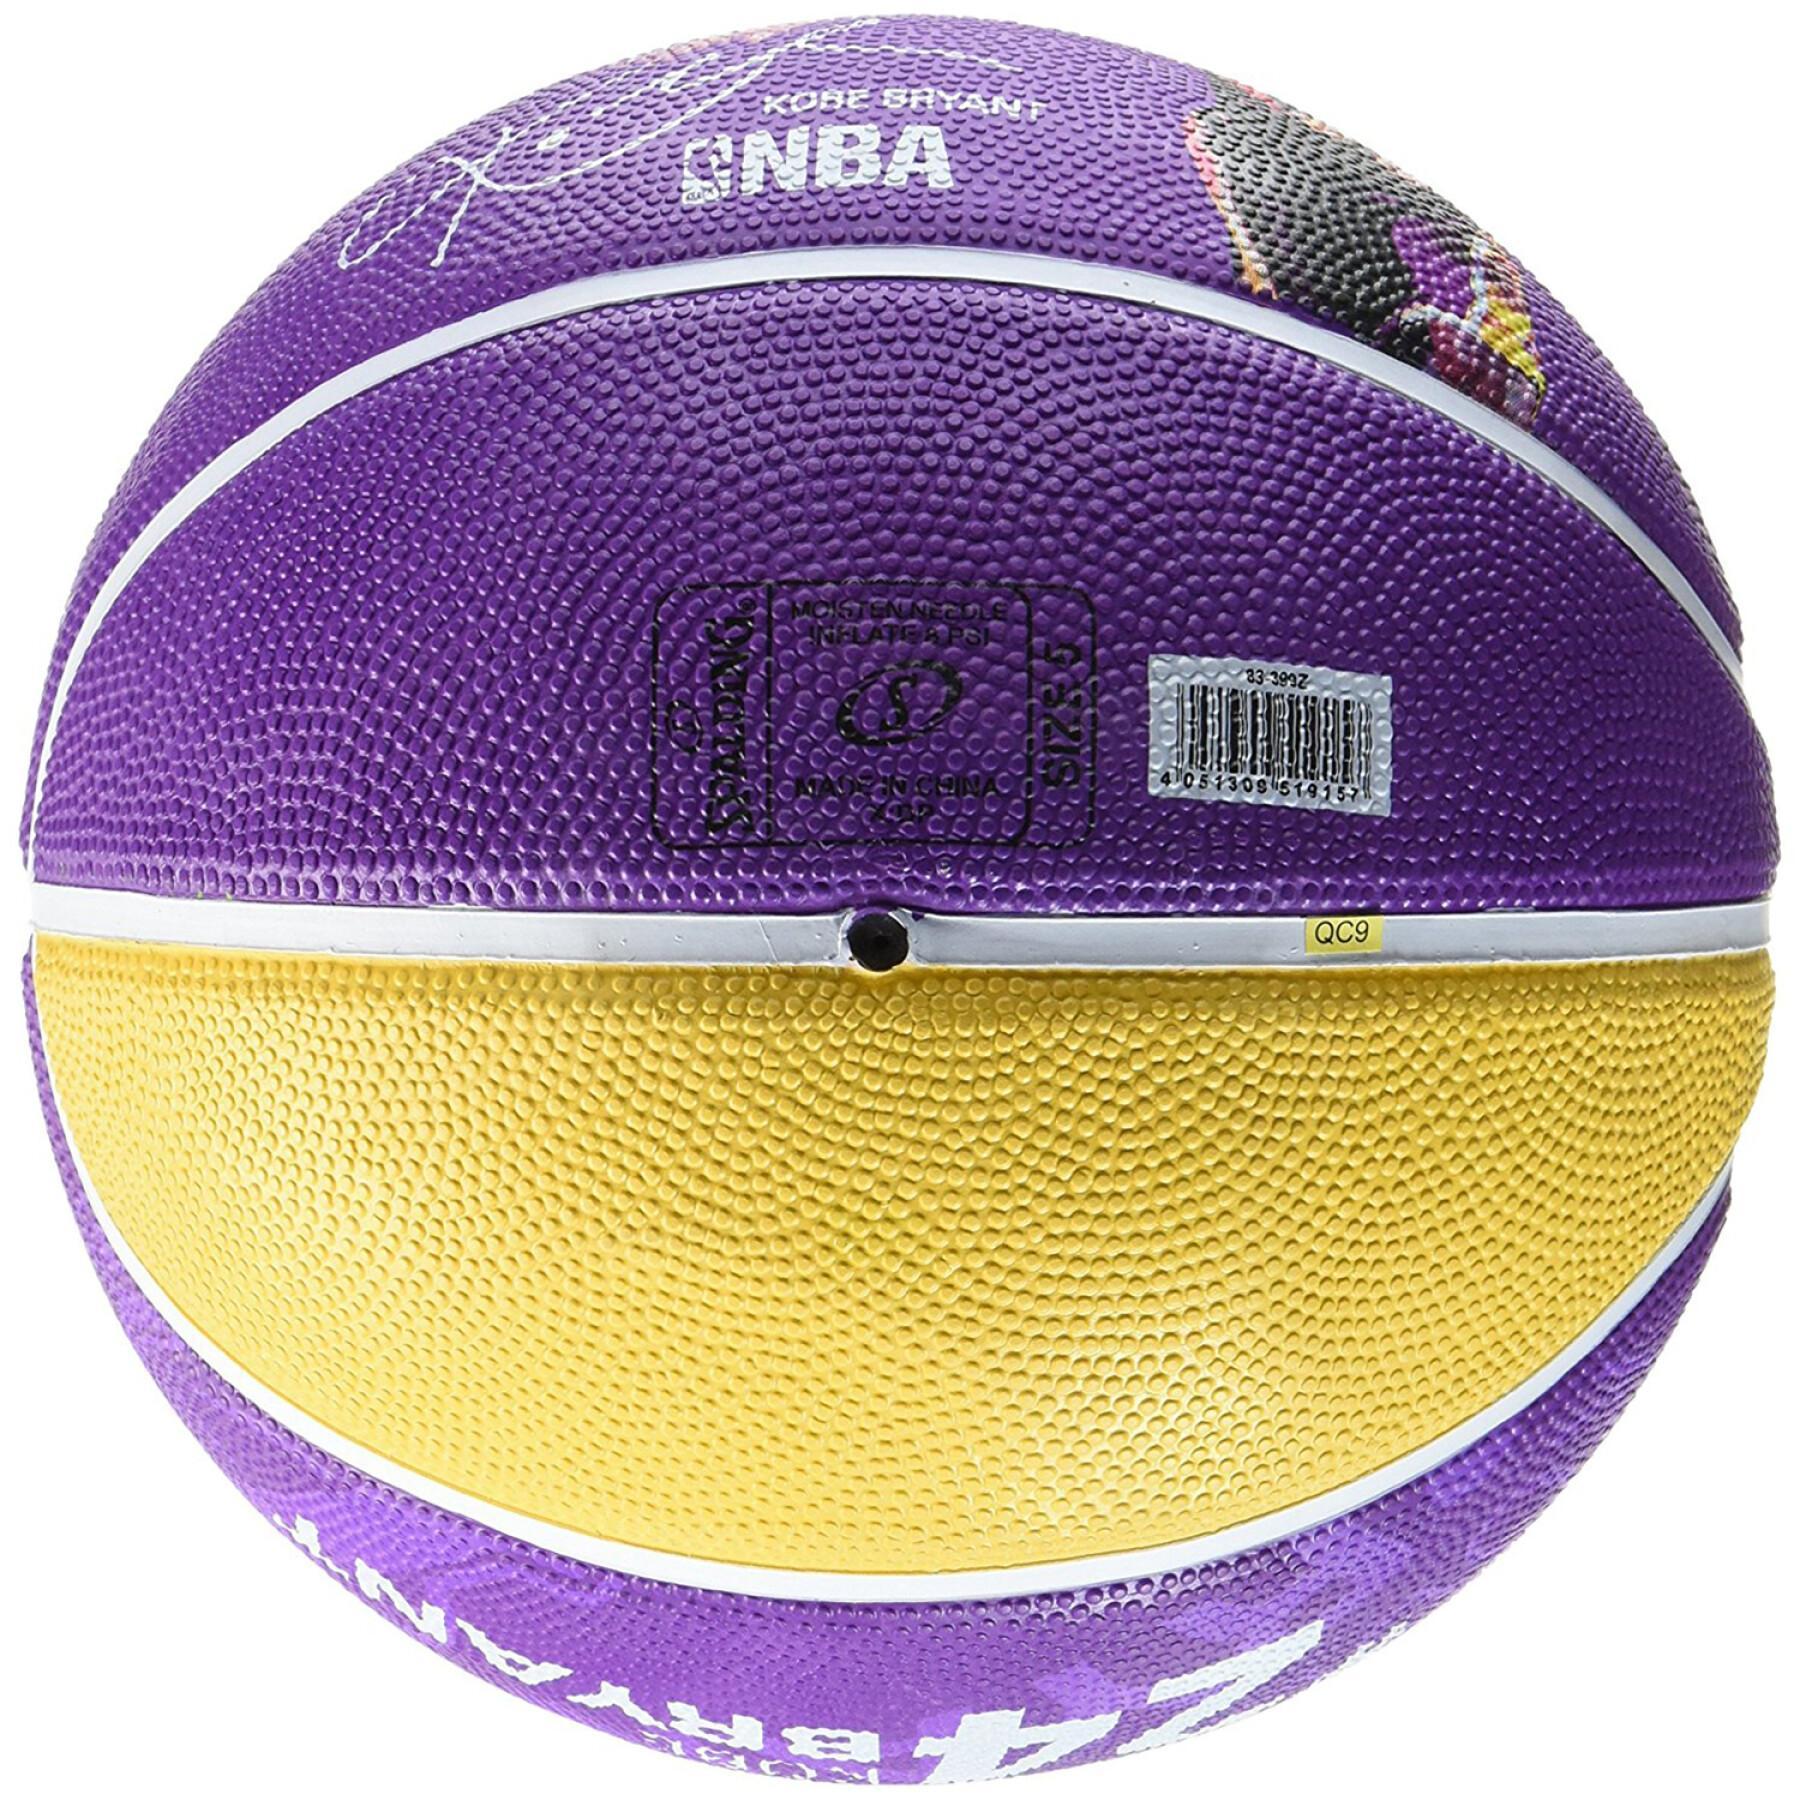 Ballon Spalding Player Kobe Bryant